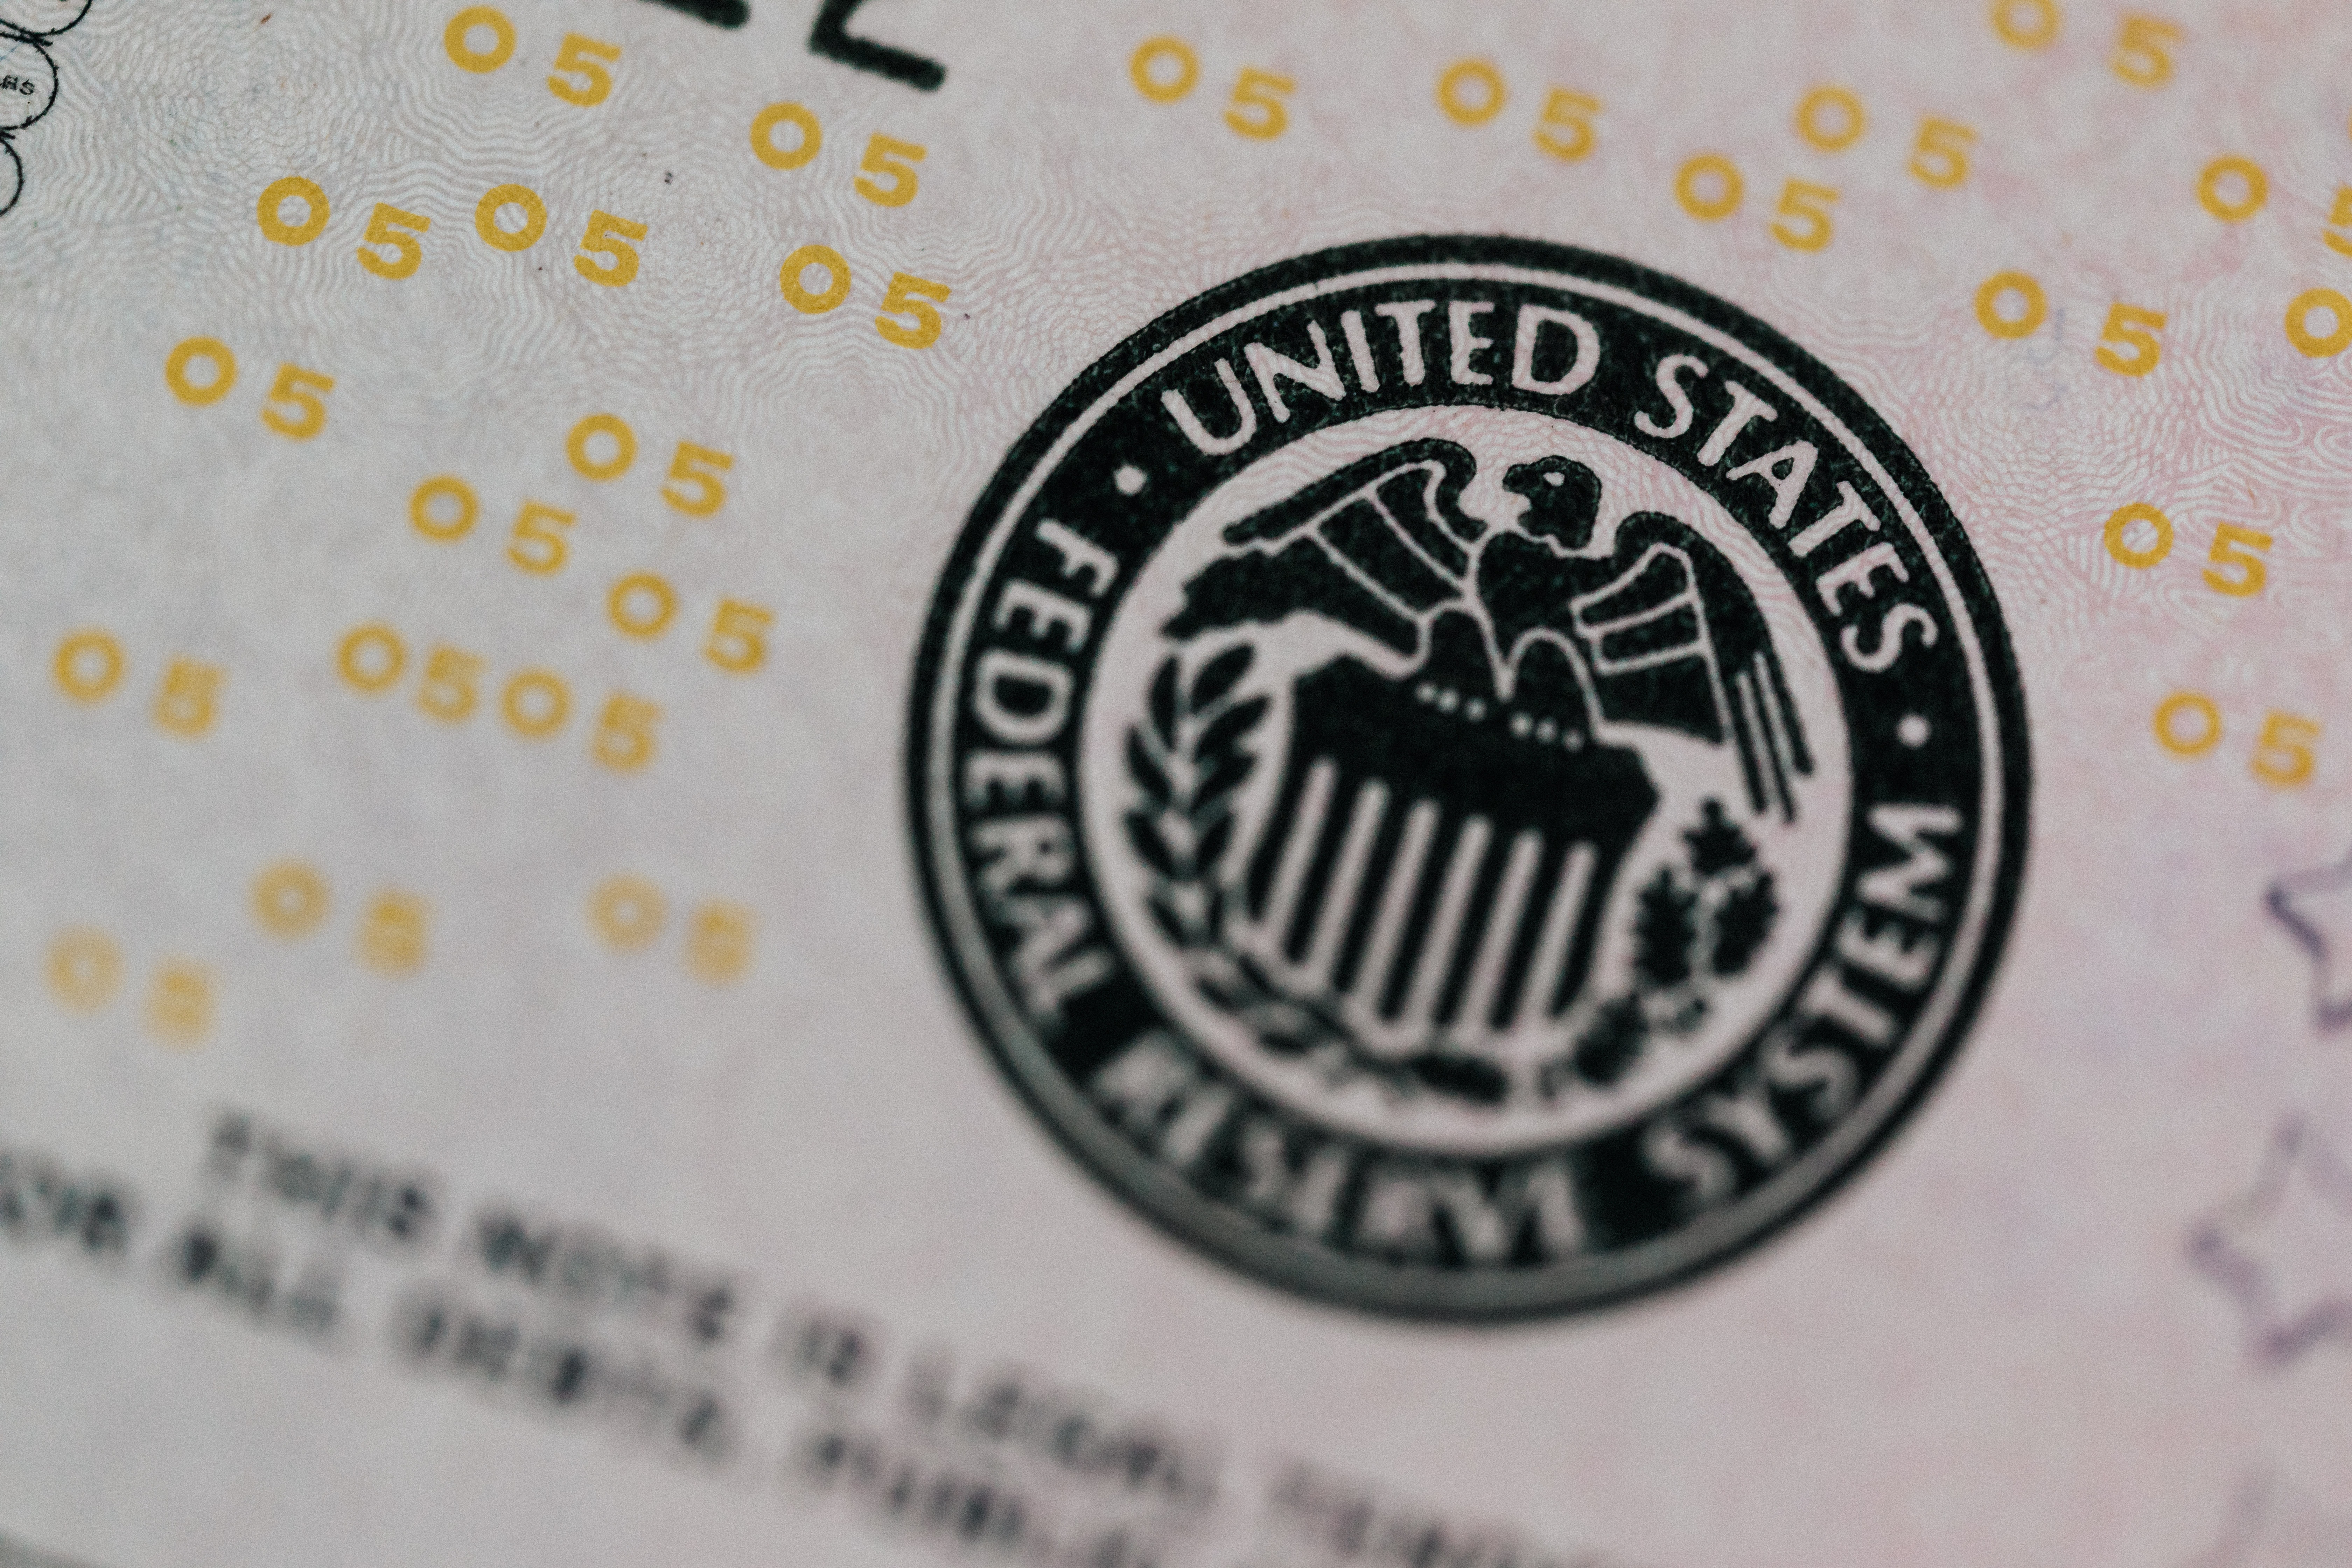 U.S. Federal Reserve System seal.